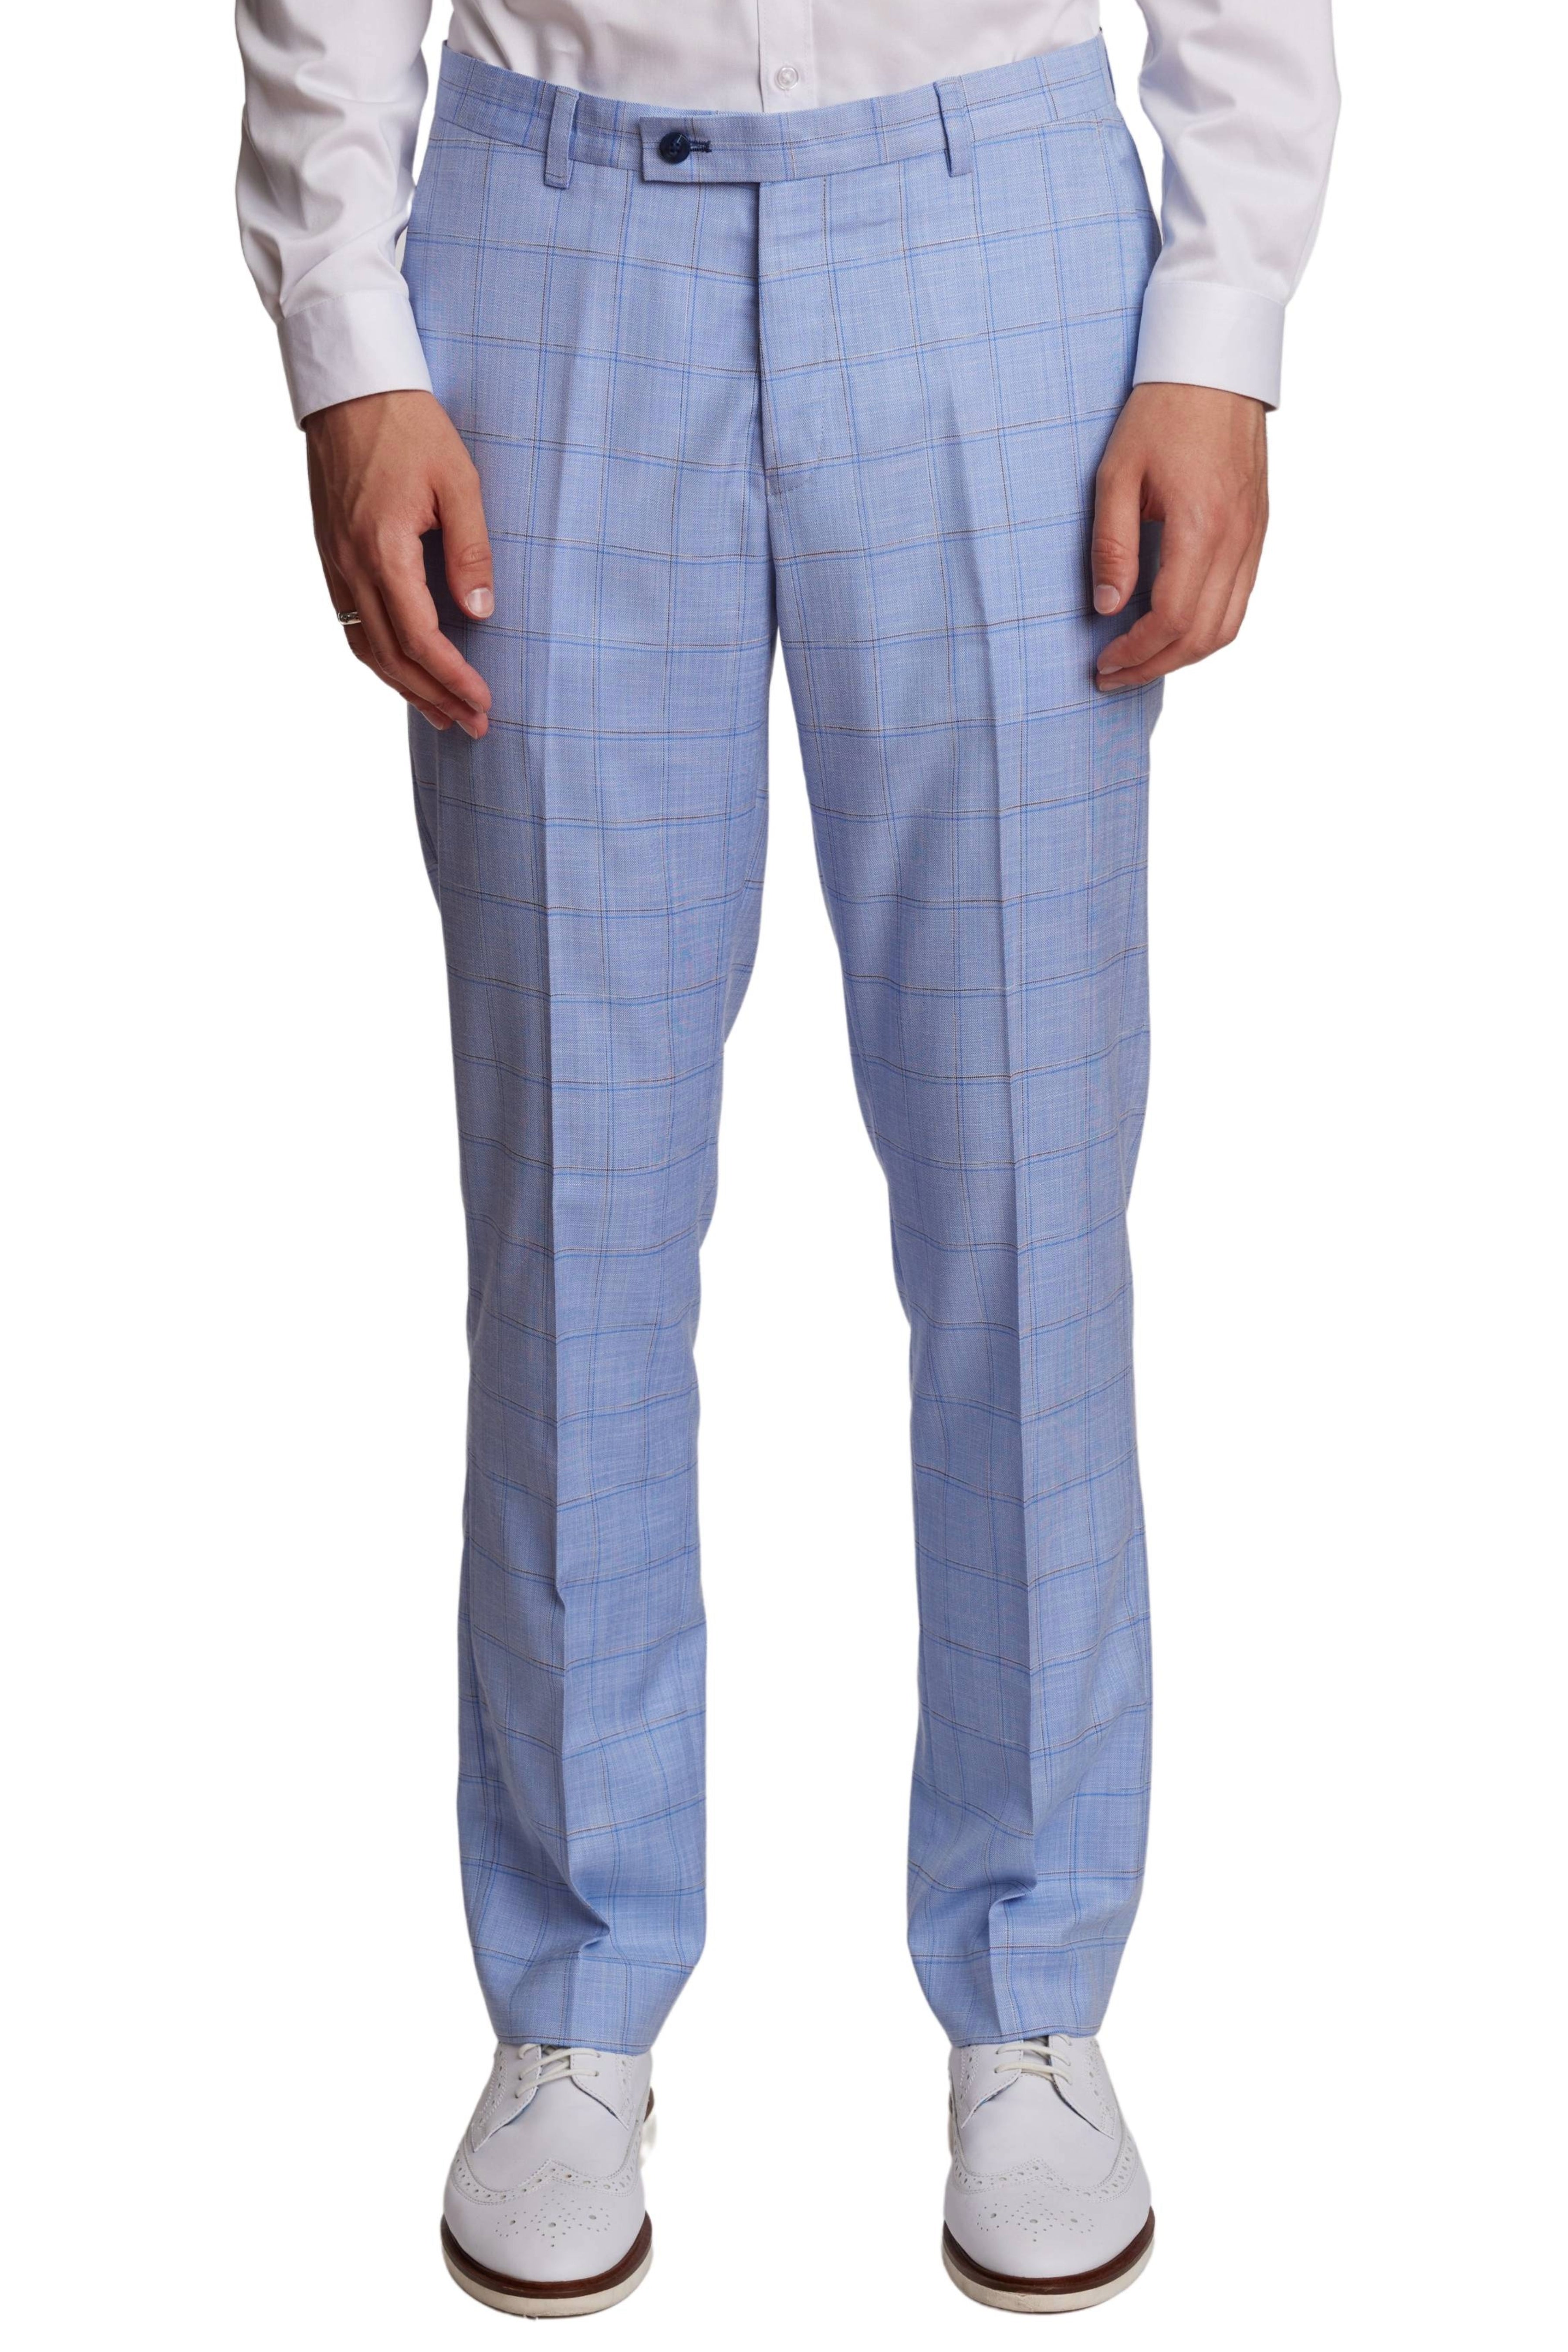 Symbol Premium Men's Slim Casual Pants (SYP-CTR-01_Navy_32),Size 32